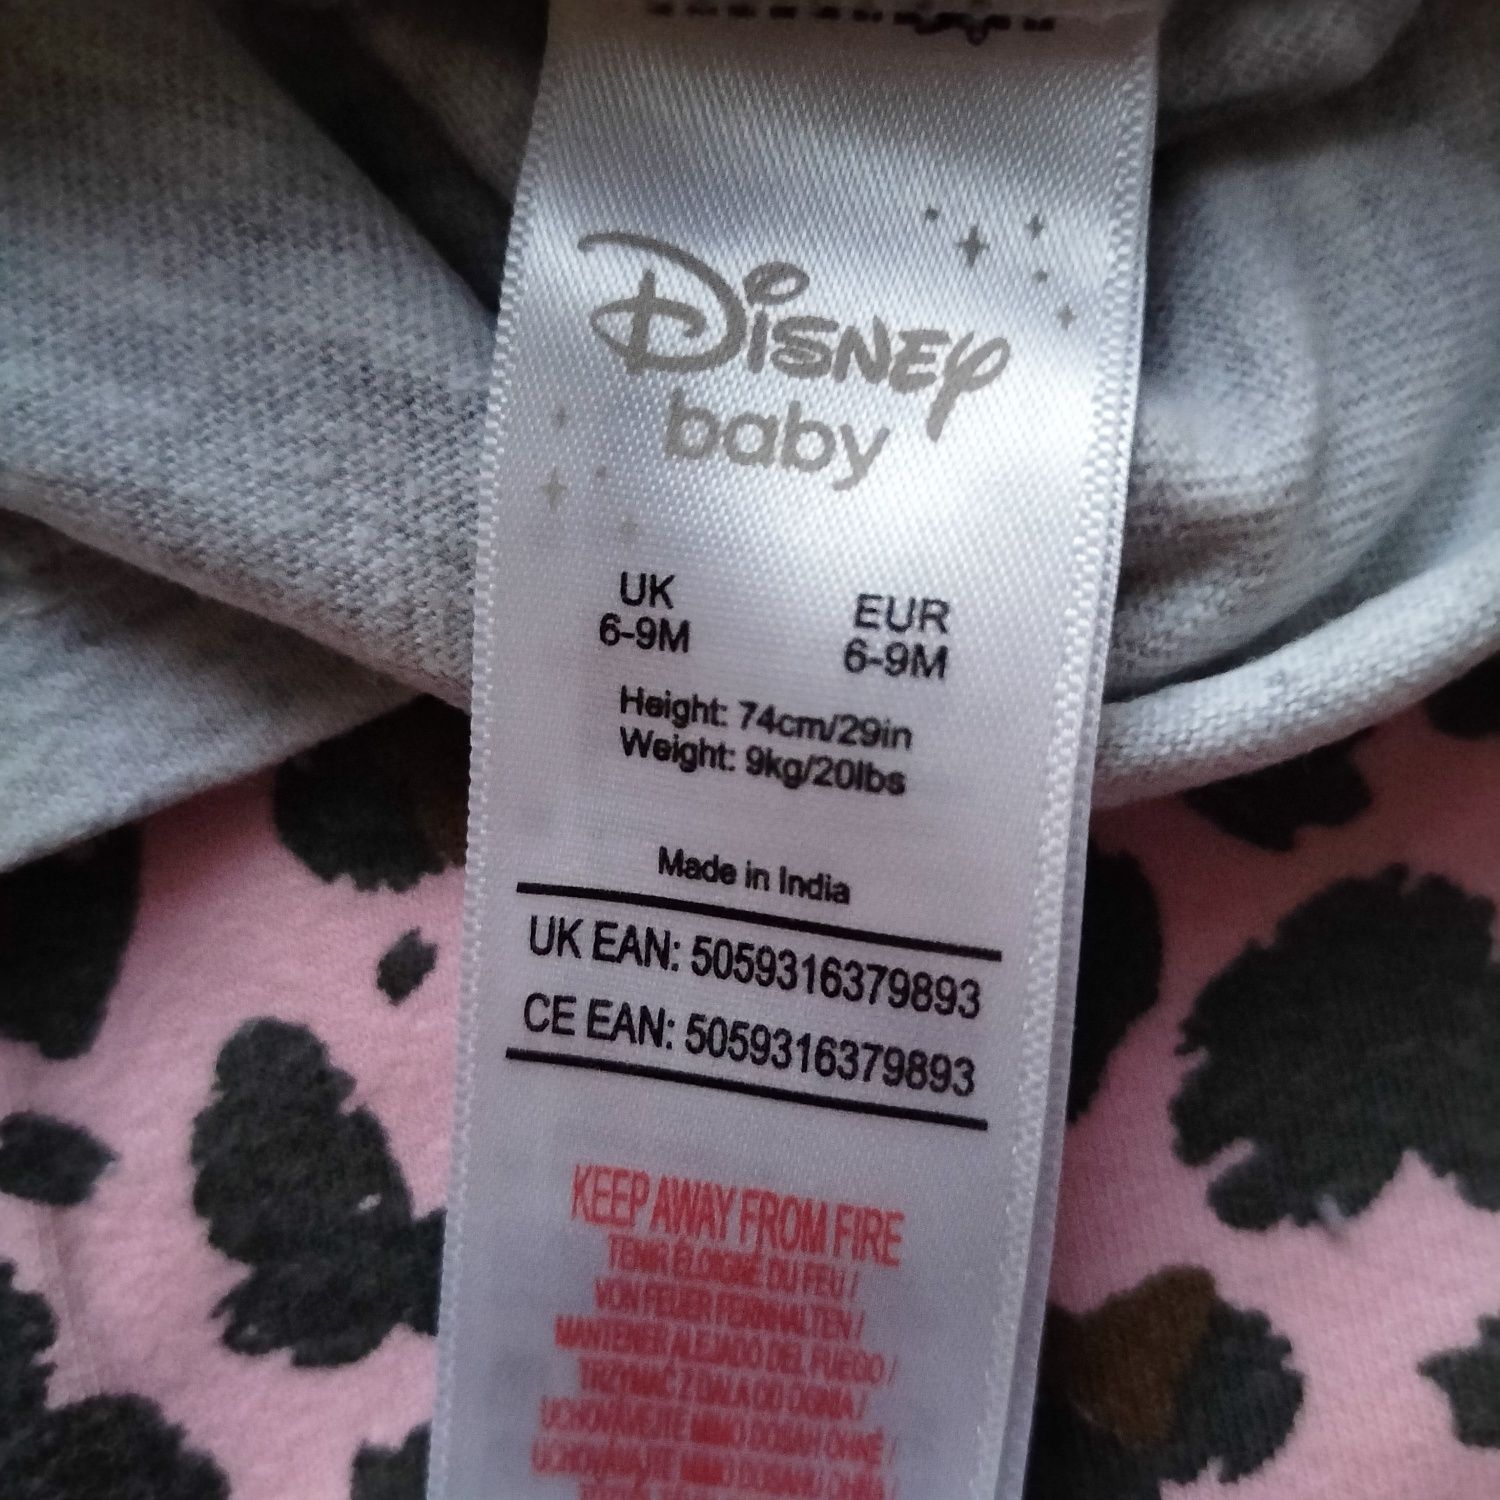 Leginsy+ koszulka Disney baby 6-9 mc